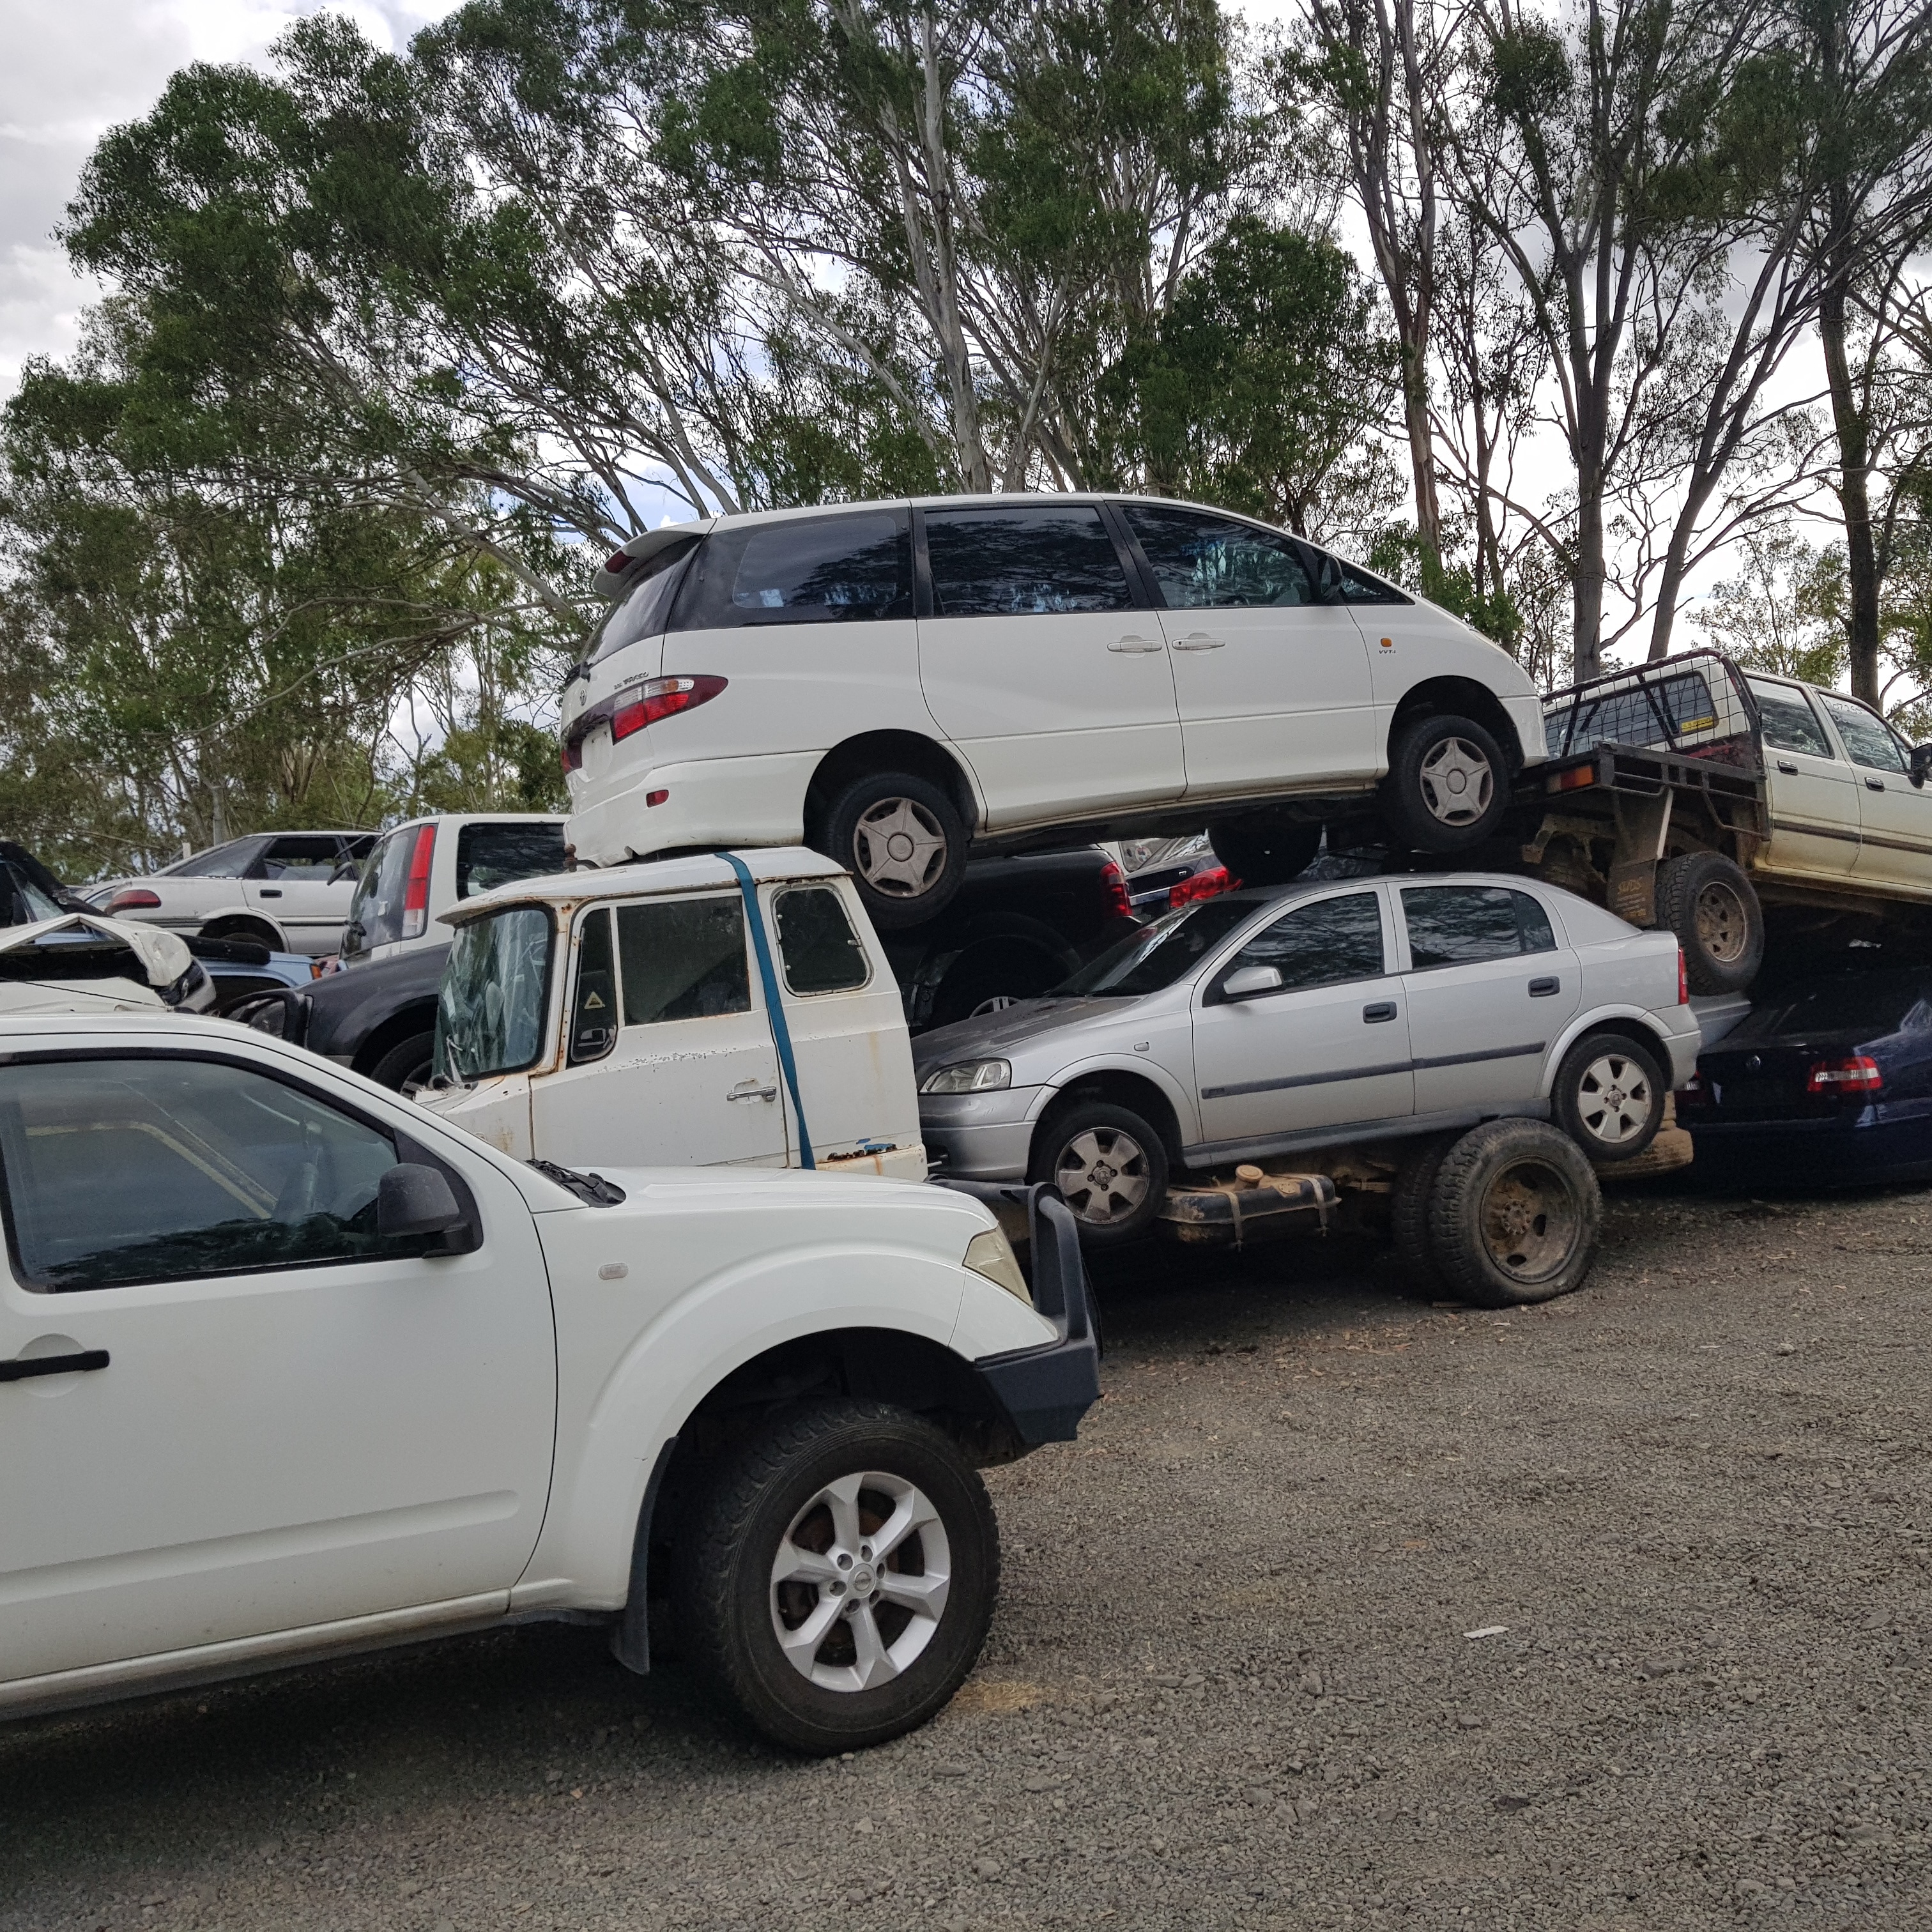 Toowoomba Car removals cash for cars sell my car Sunshine Coast Brisbane Gold Coast